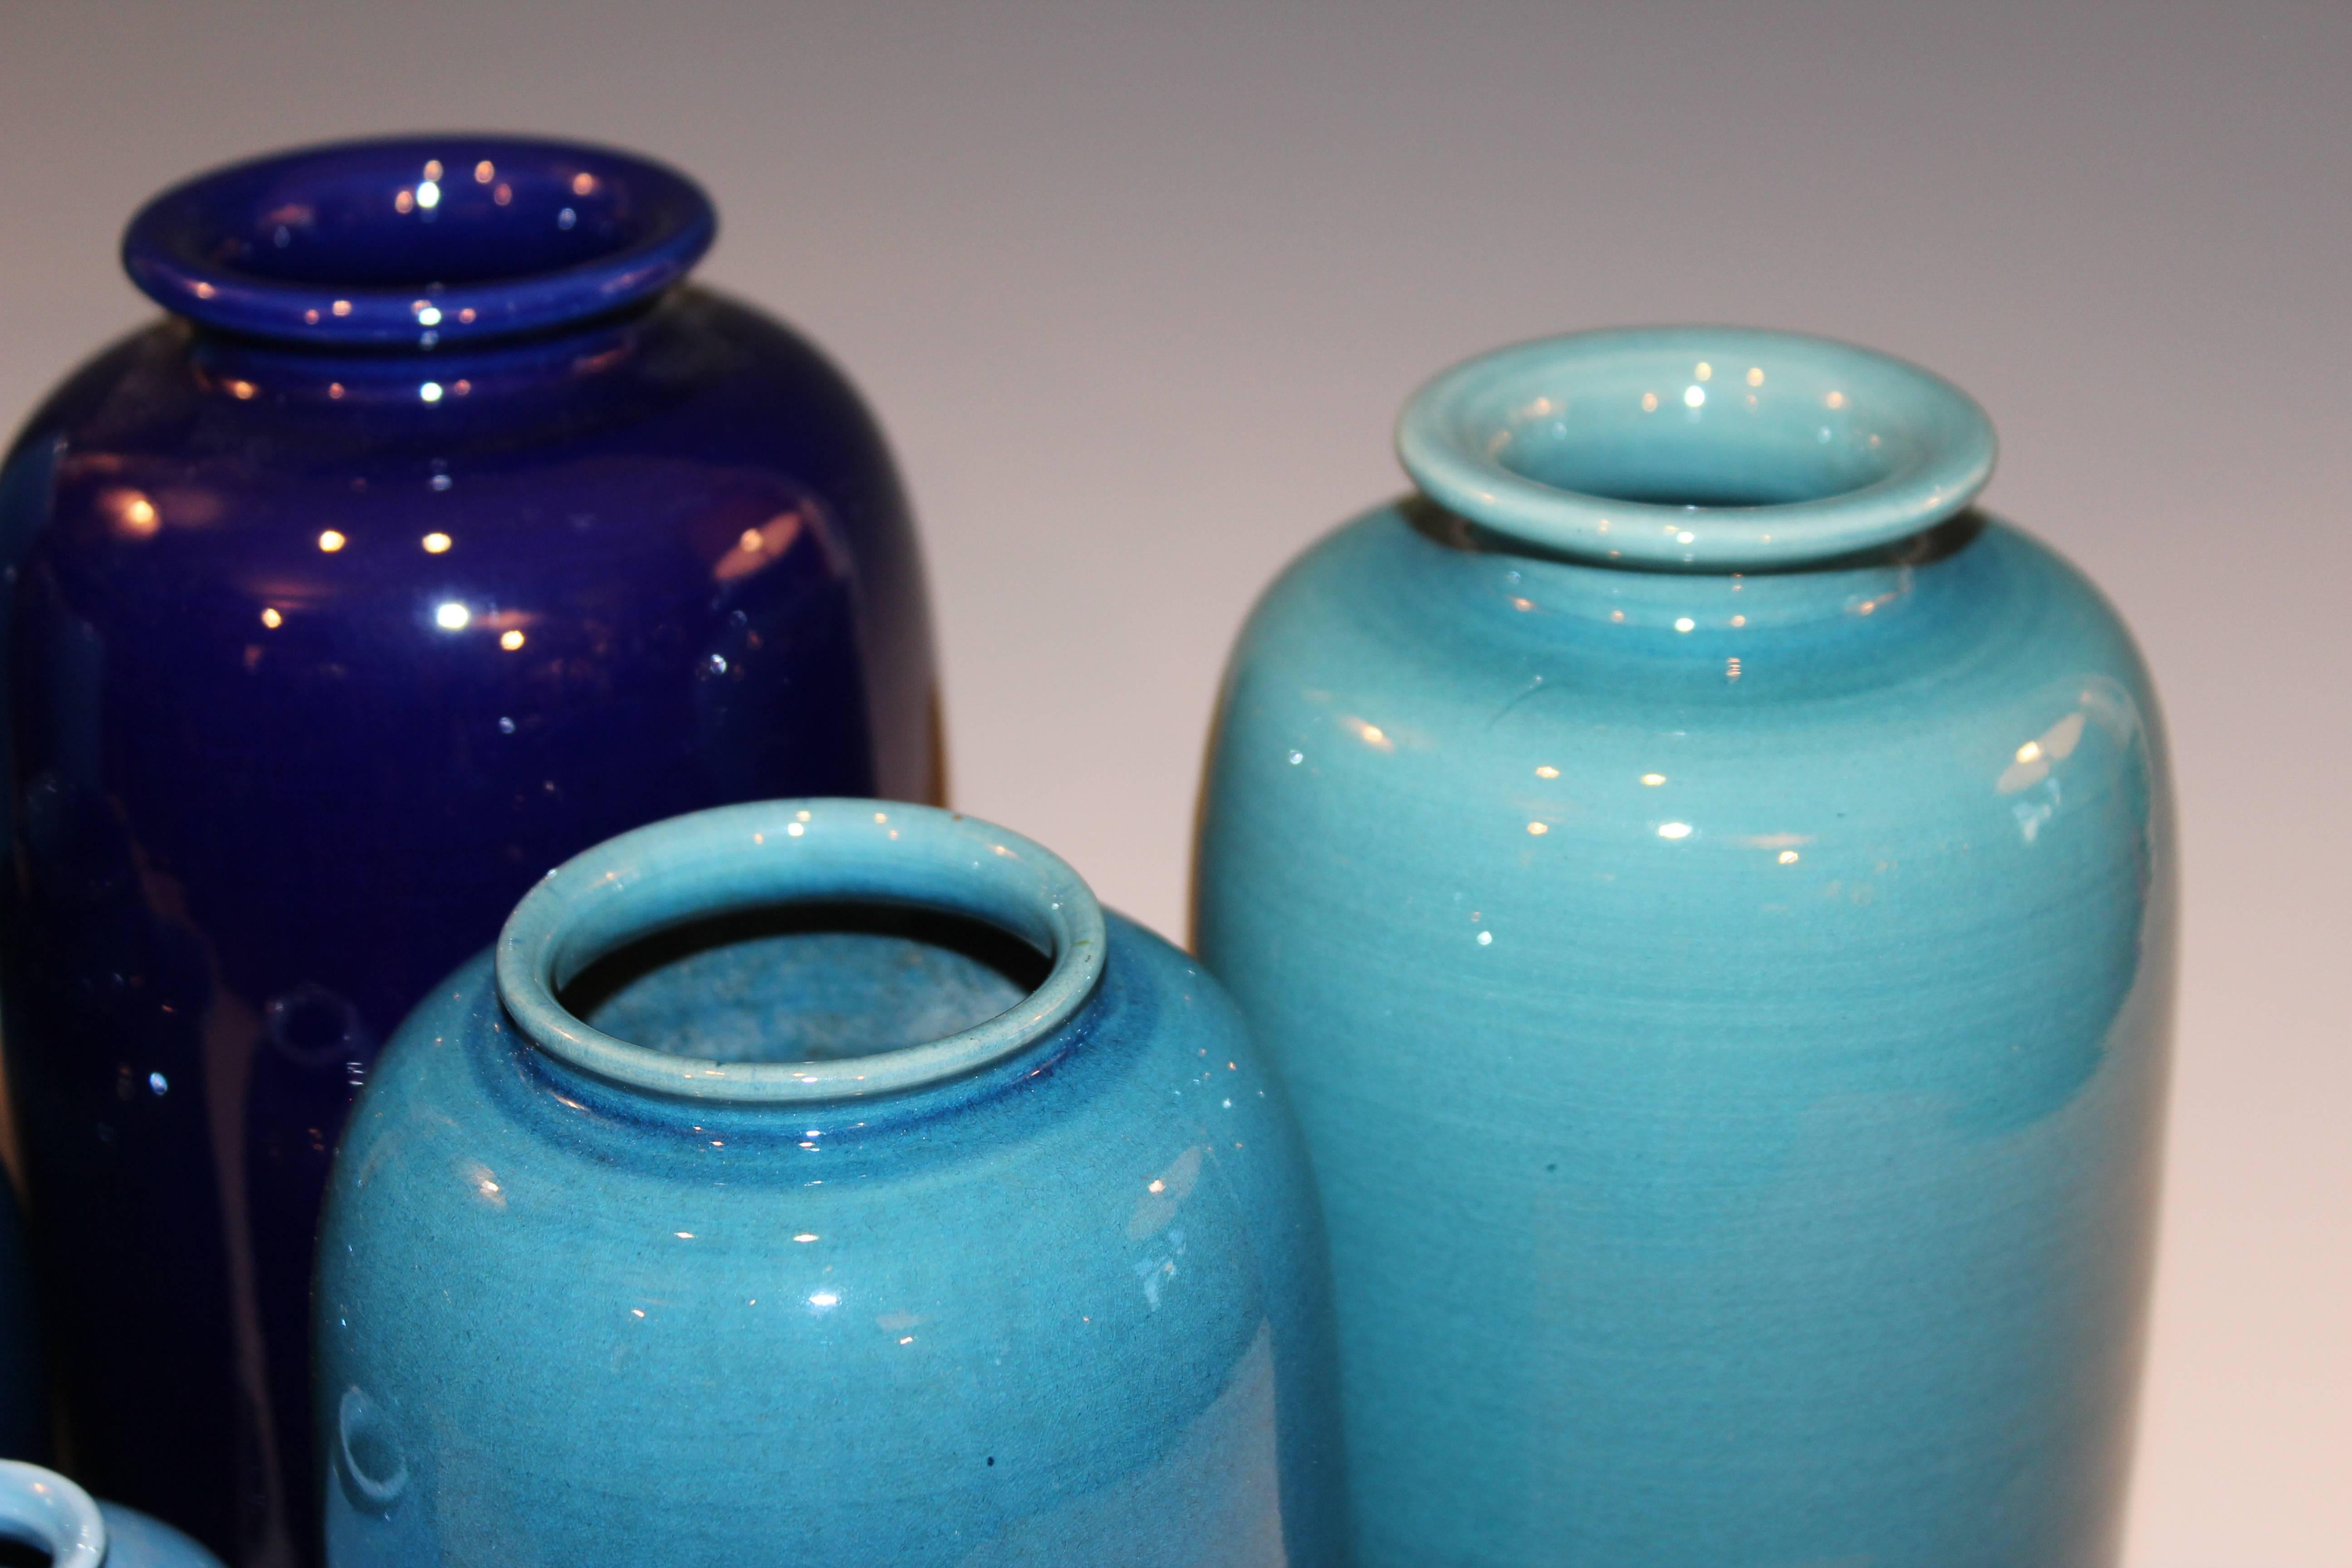 Turned Set of Antique and Vintage Awaji Studio Pottery Vases Jars Shades of Blue